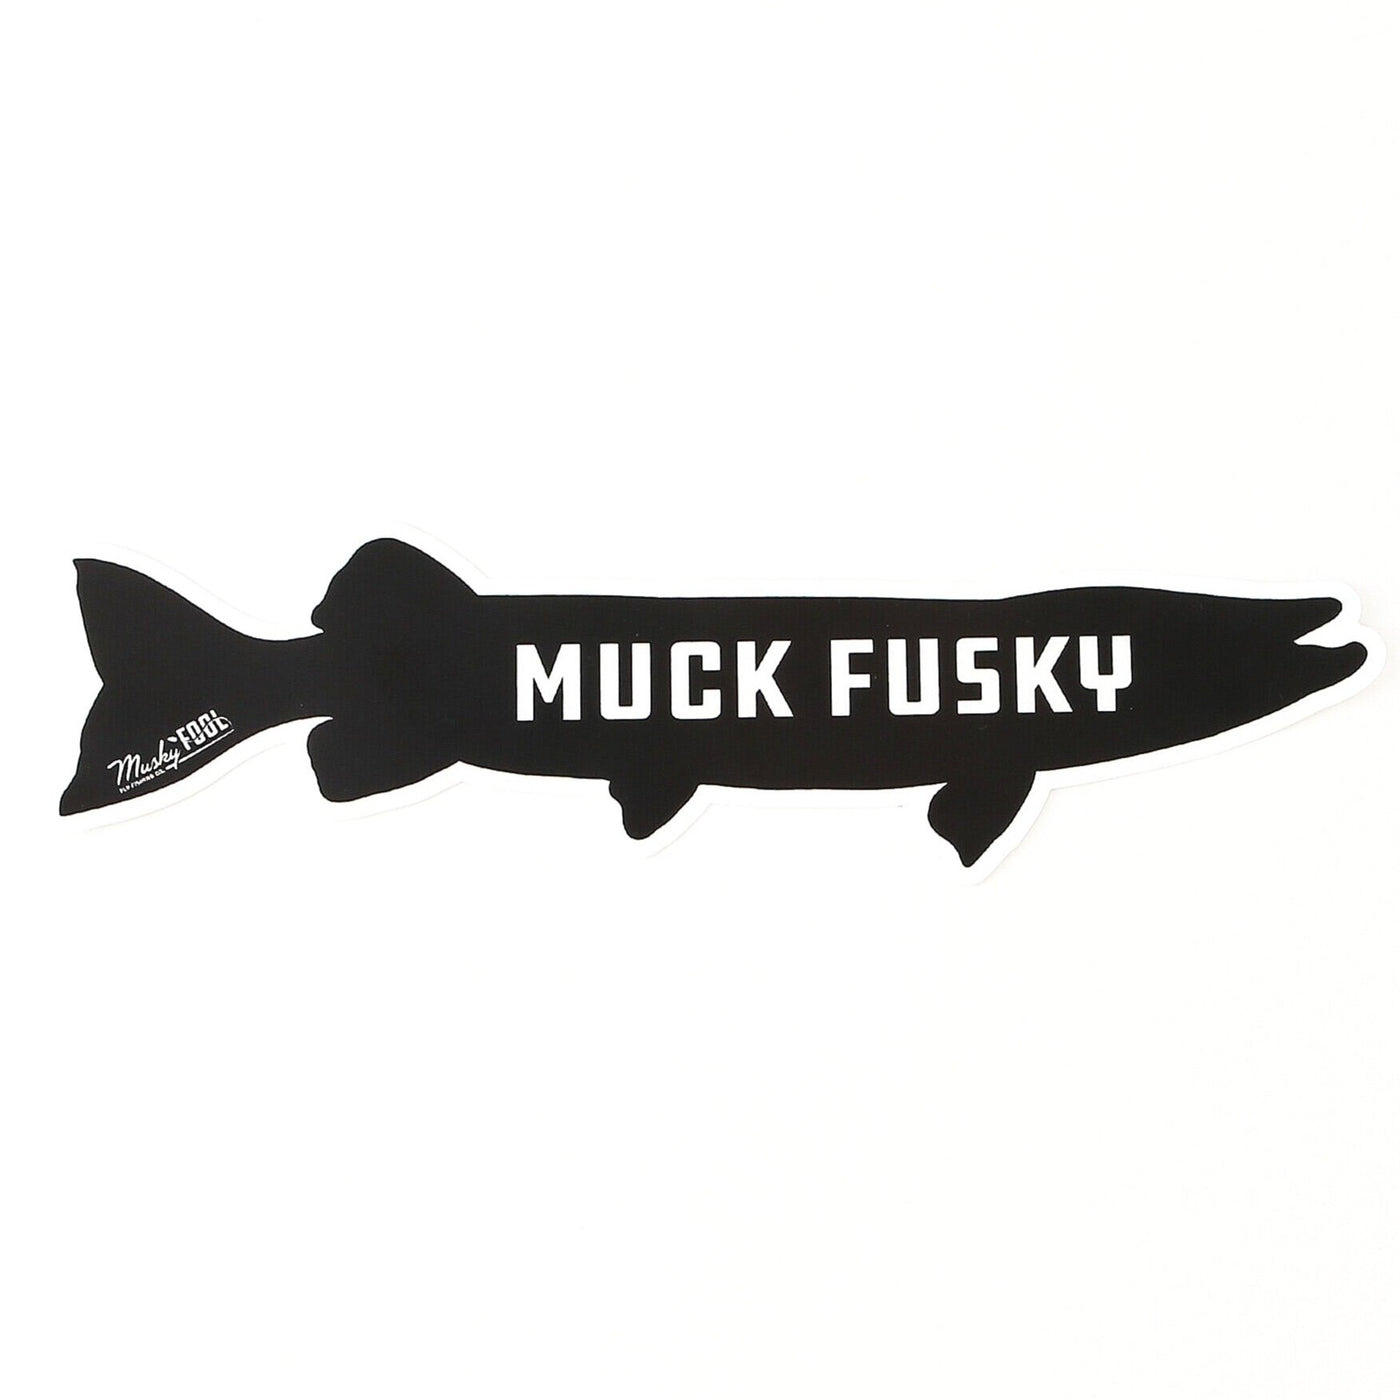 Musky Fool "Muck Fusky" Sticker